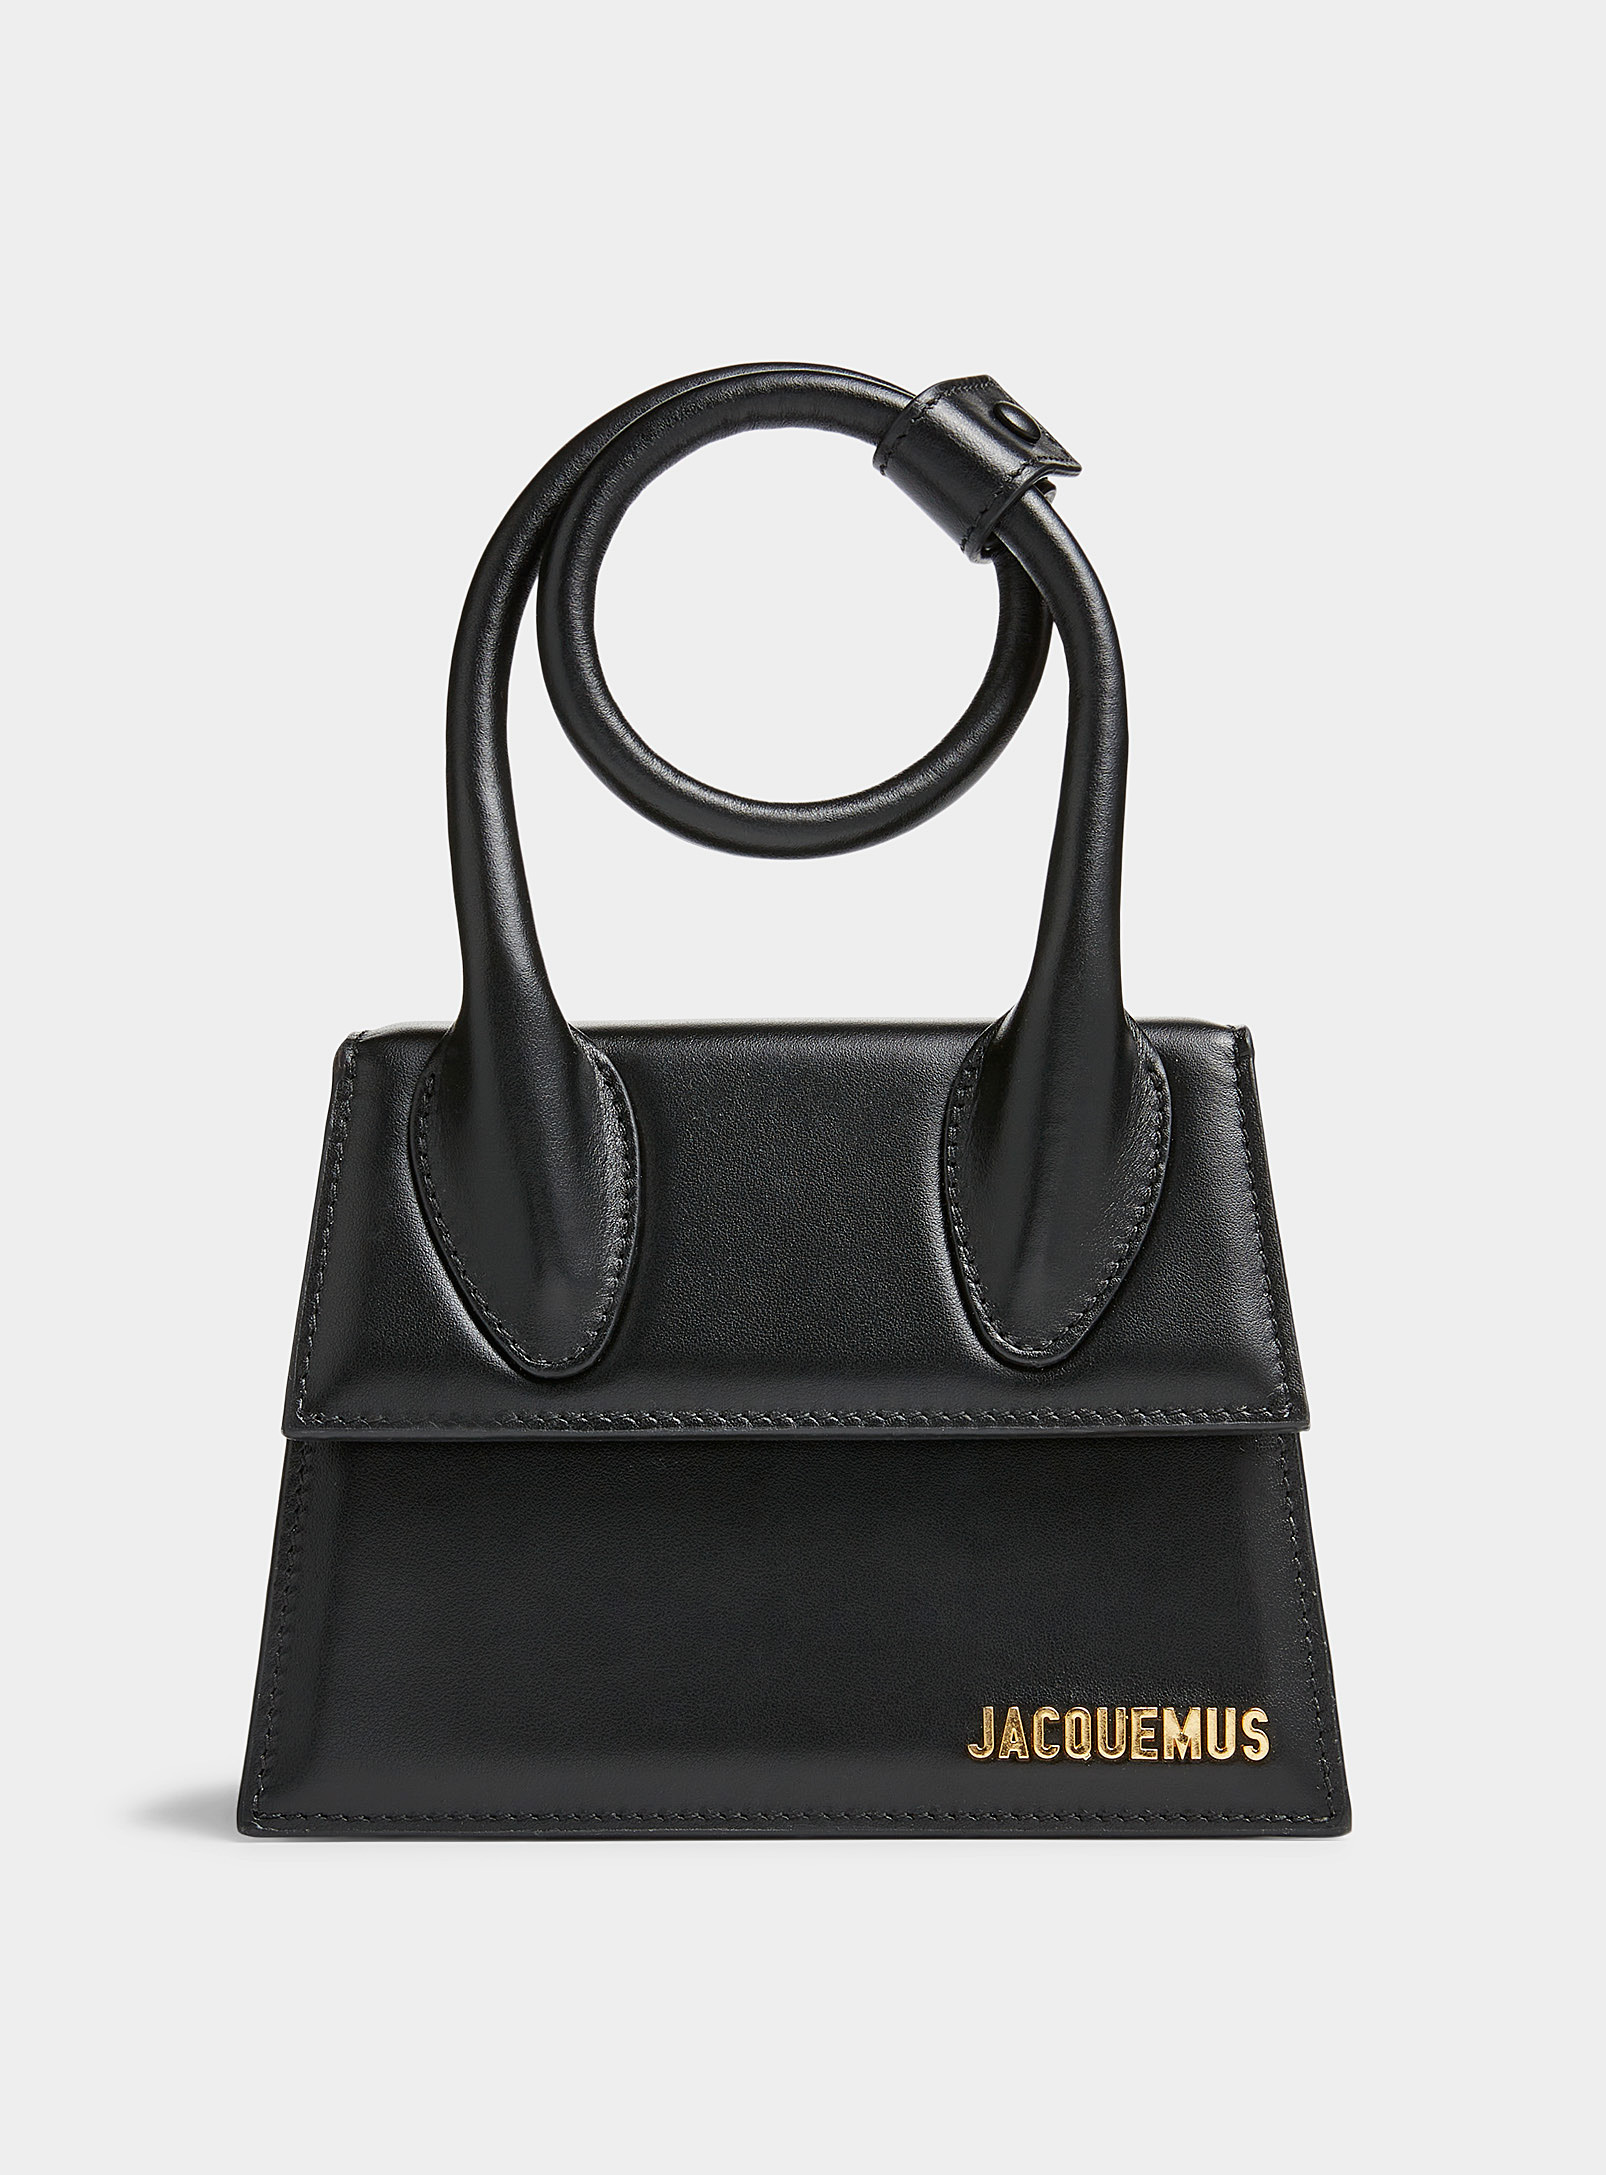 Jacquemus - Women's Chiquito Noeud bag